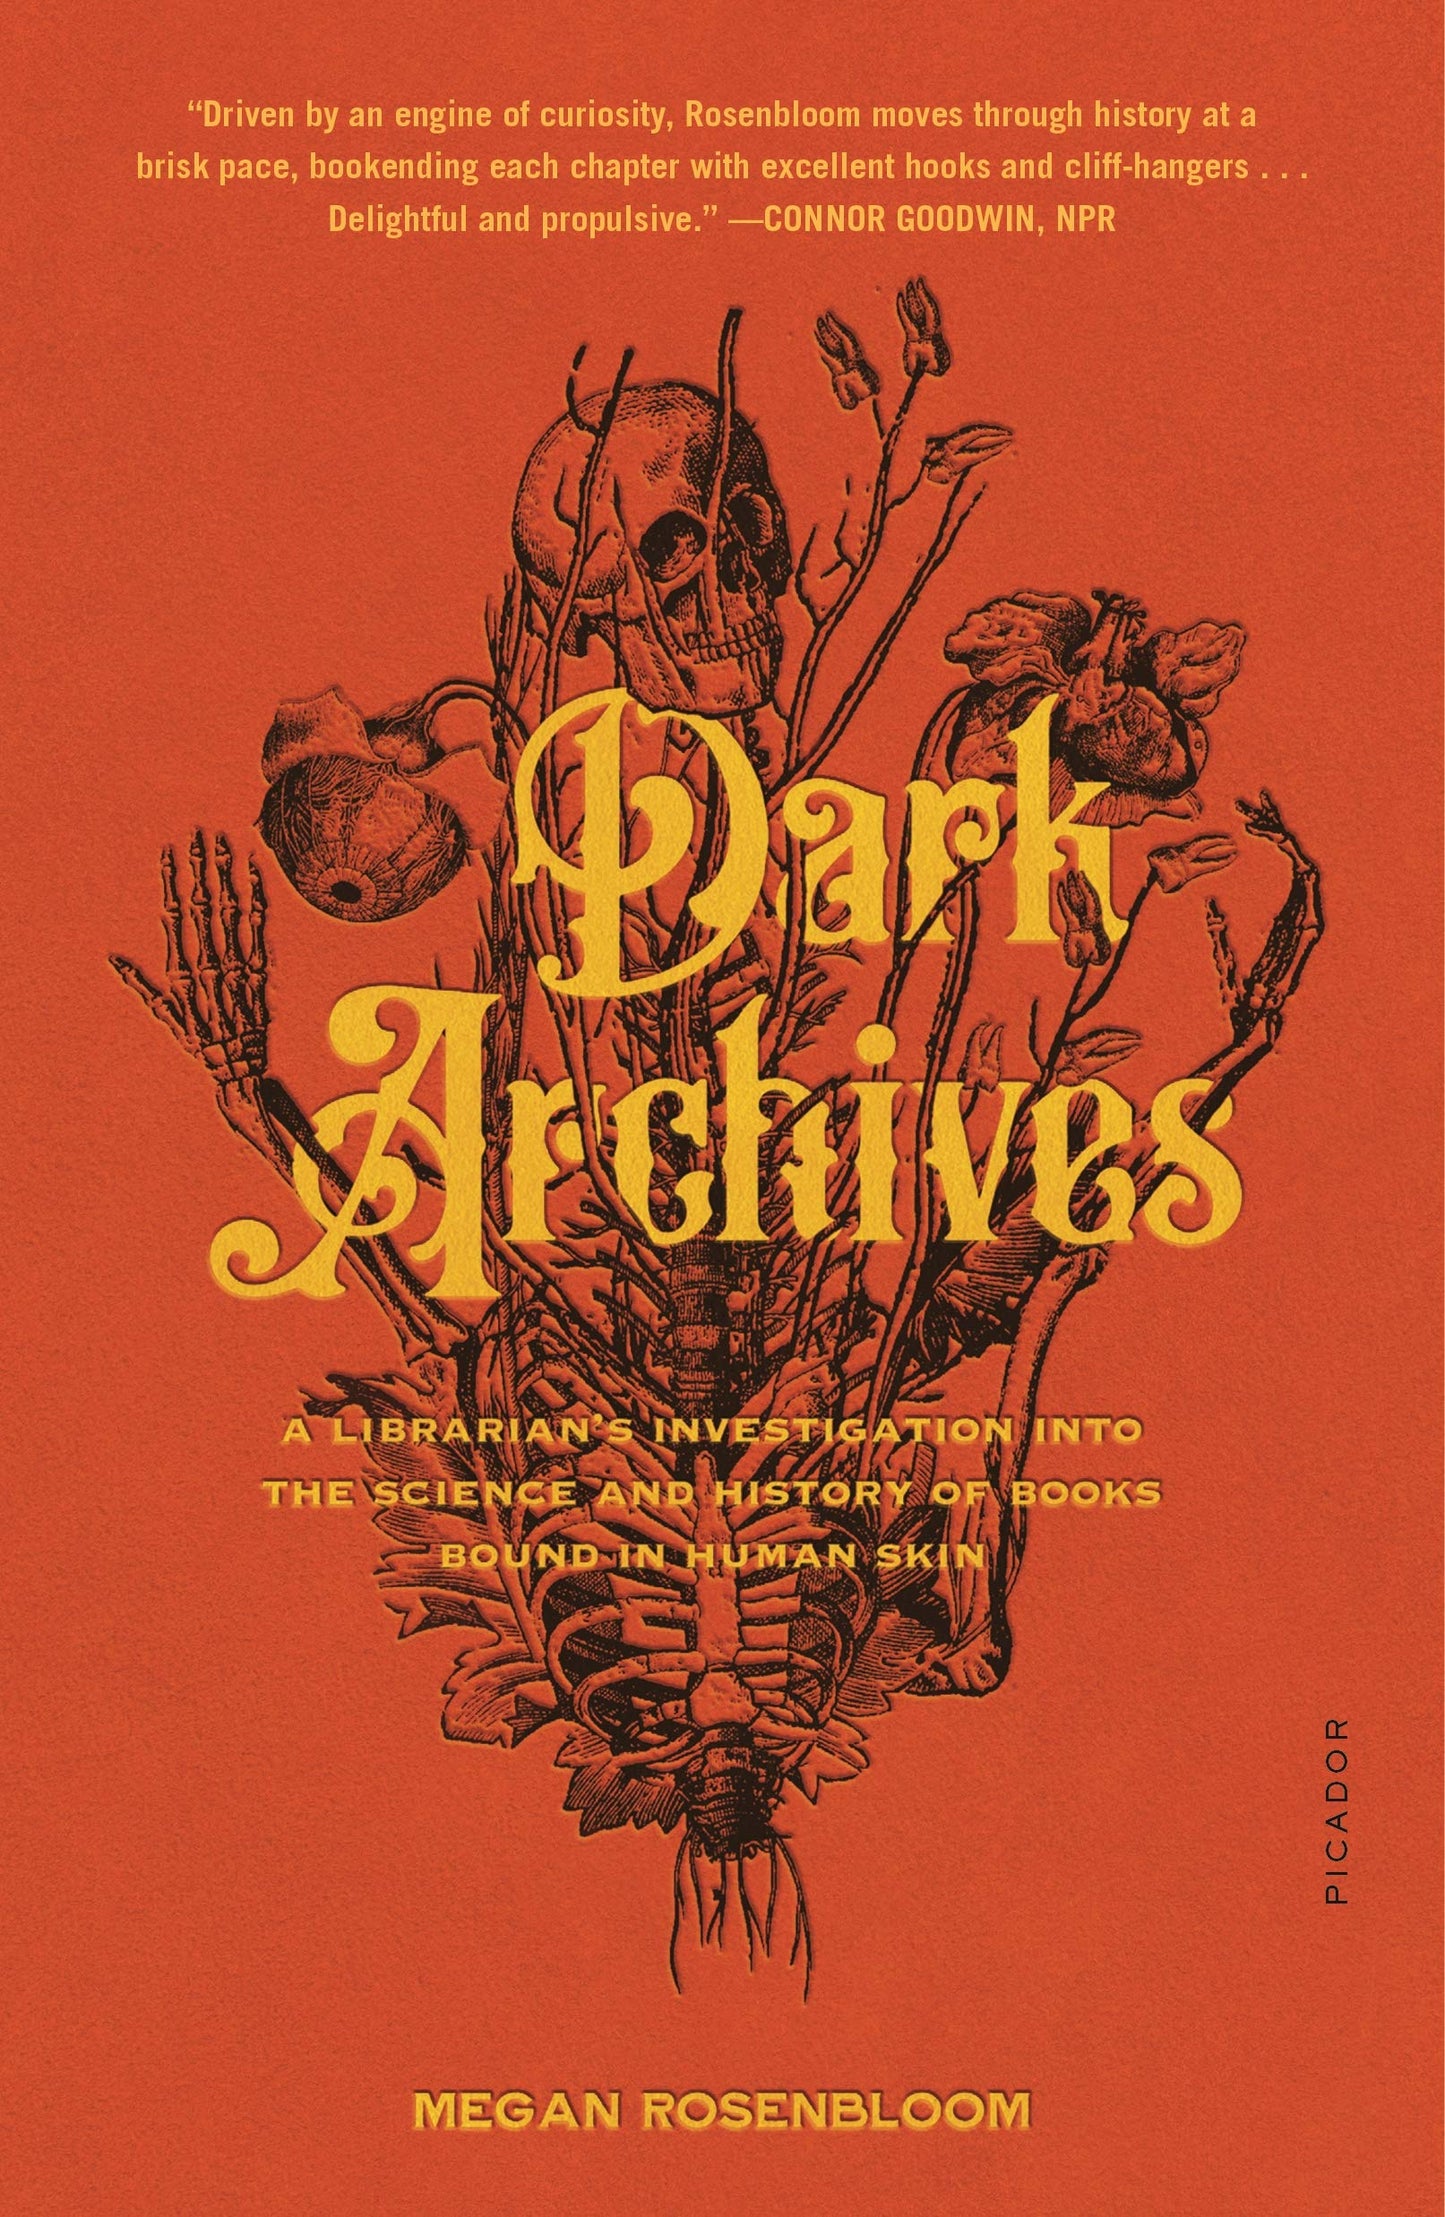 Dark Archives, by Megan Rosenbloom